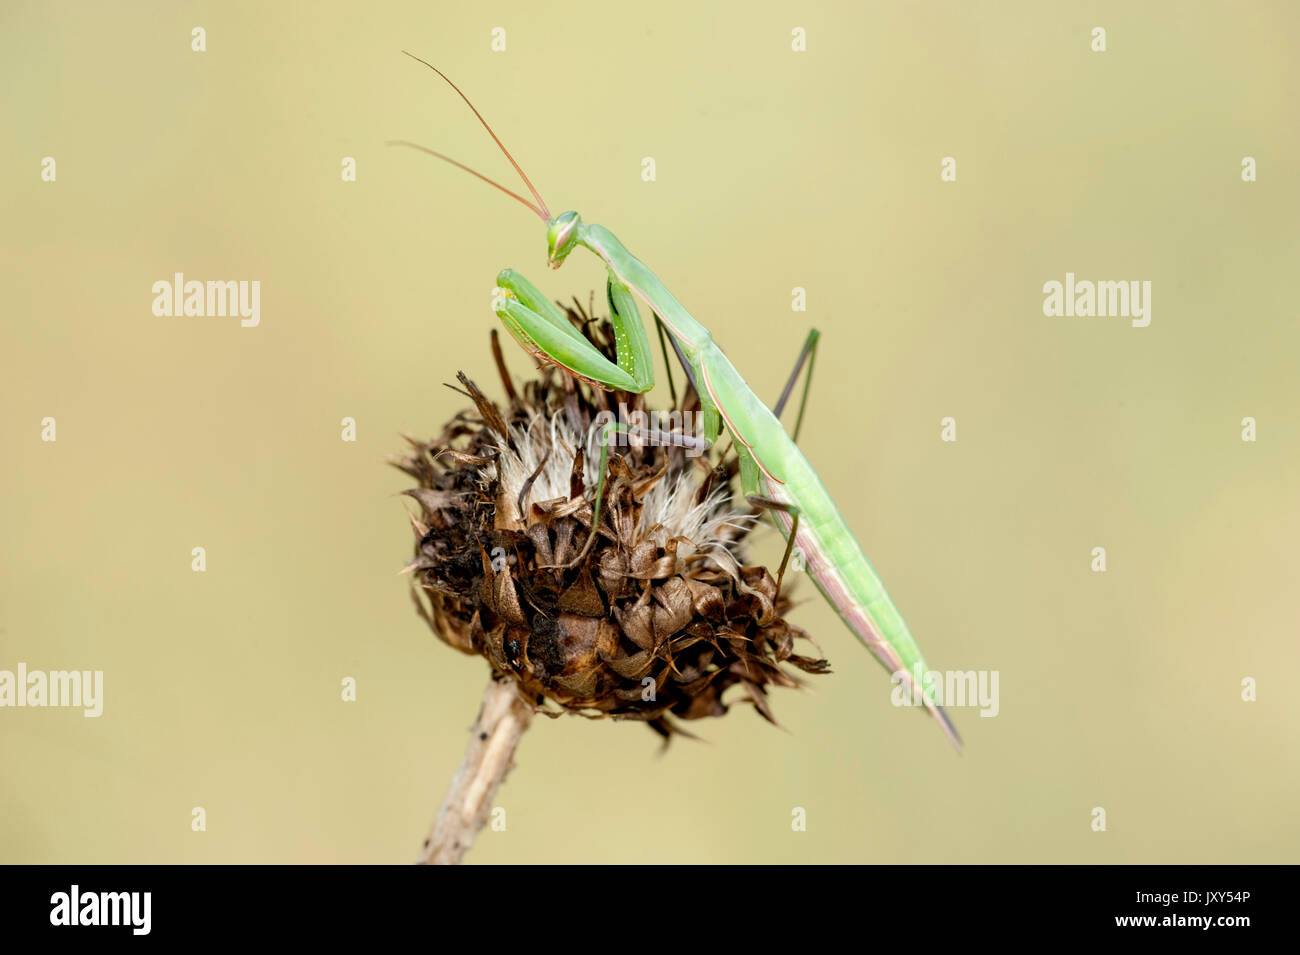 Praying Mantis, Mantis religiosa, Romania, Europe, green, on flower head Stock Photo